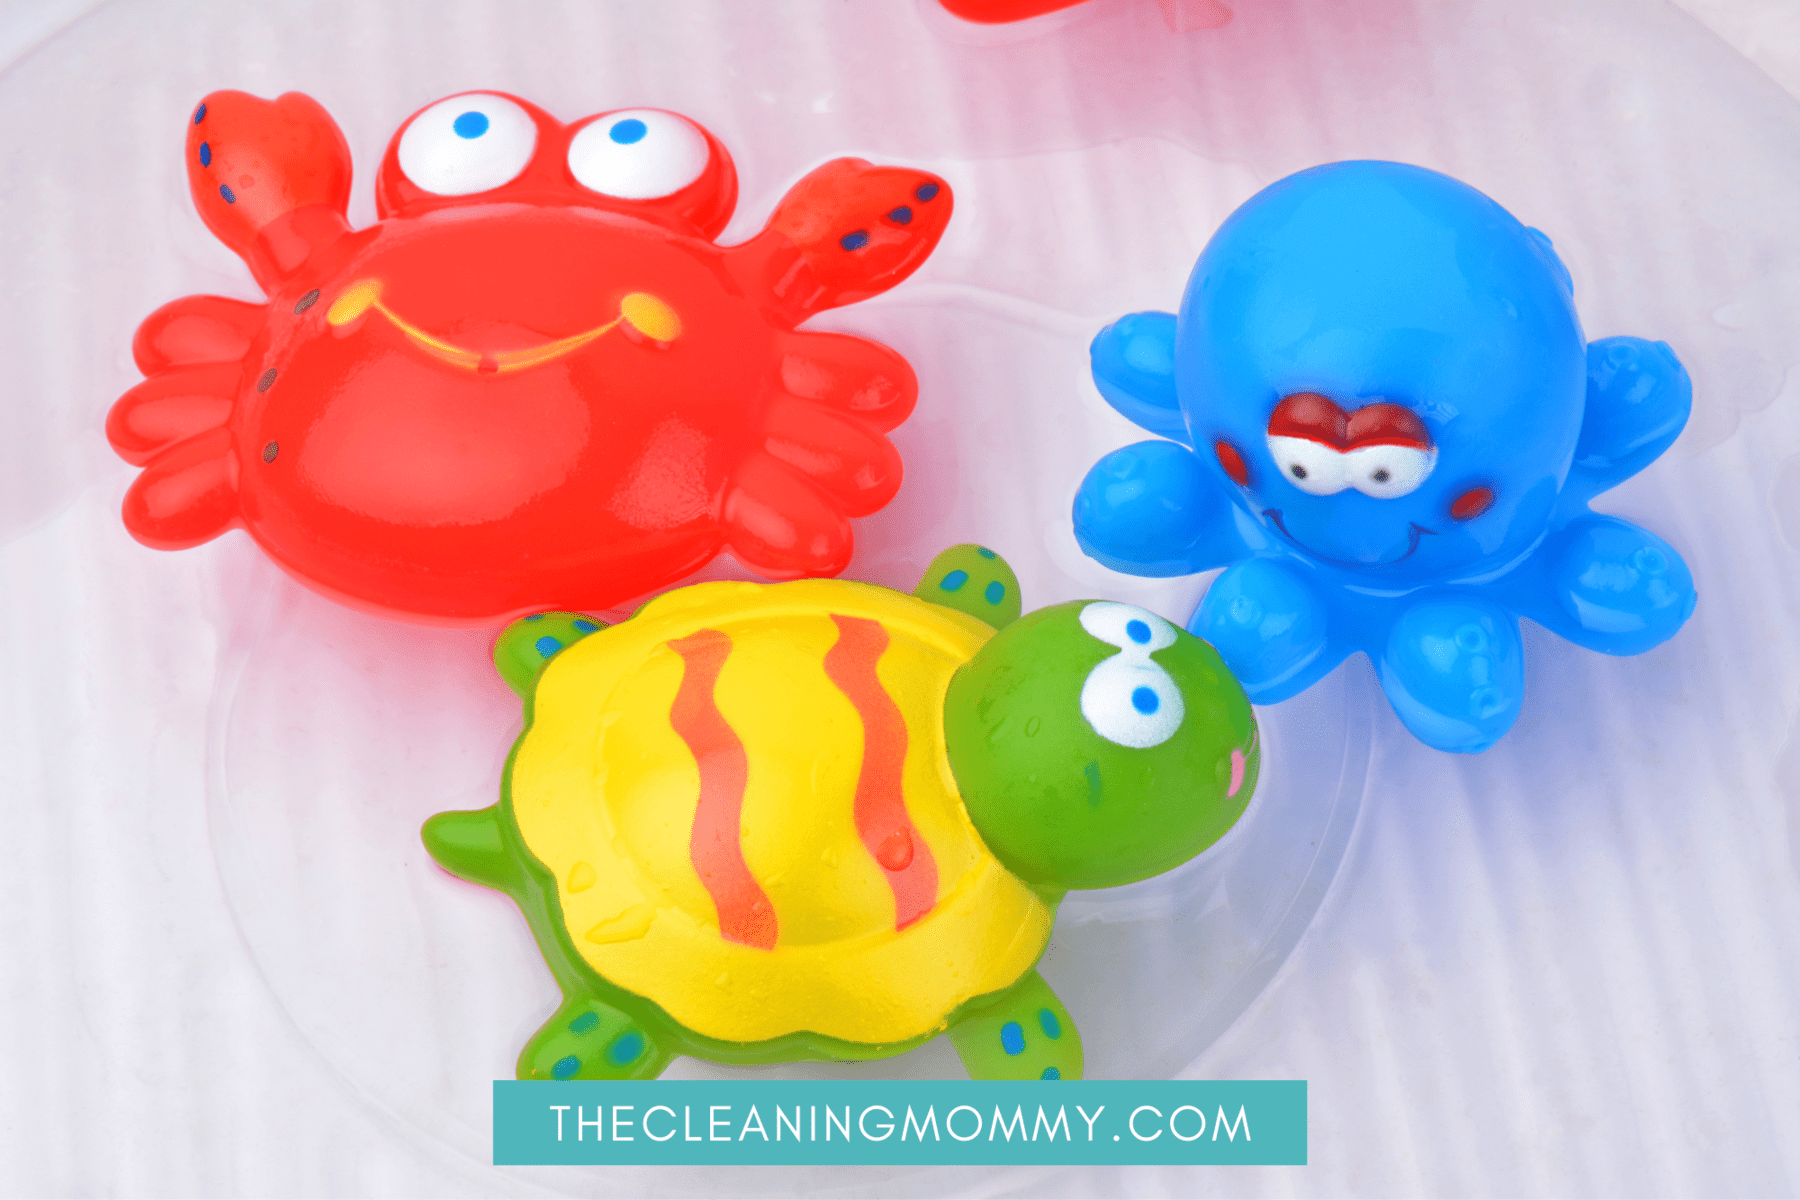 Red, blue bath toys, with green turtle bath toy